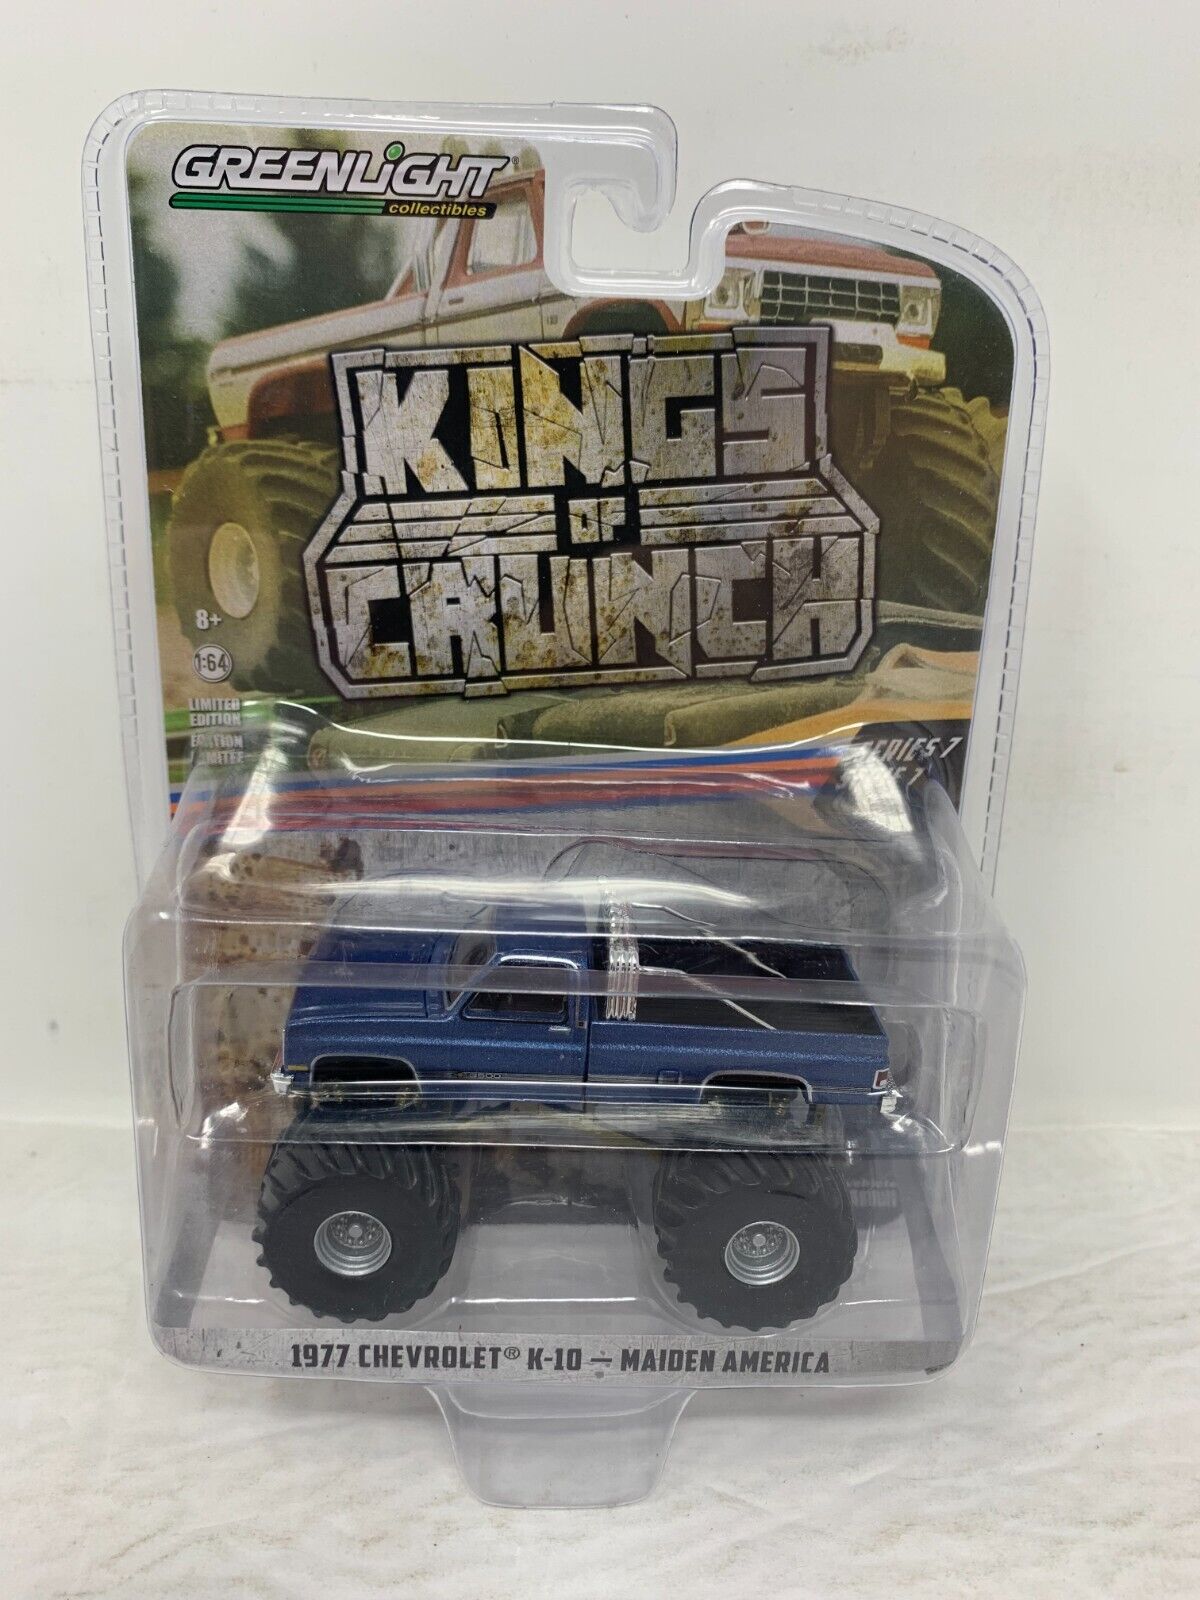 Greenlight Kings of Crunch Series 7 1977 Chevy K-10 Maiden America 1:64 Diecast